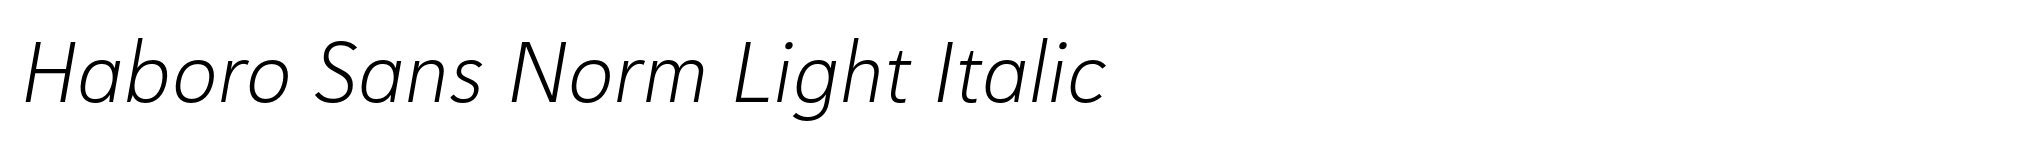 Haboro Sans Norm Light Italic image